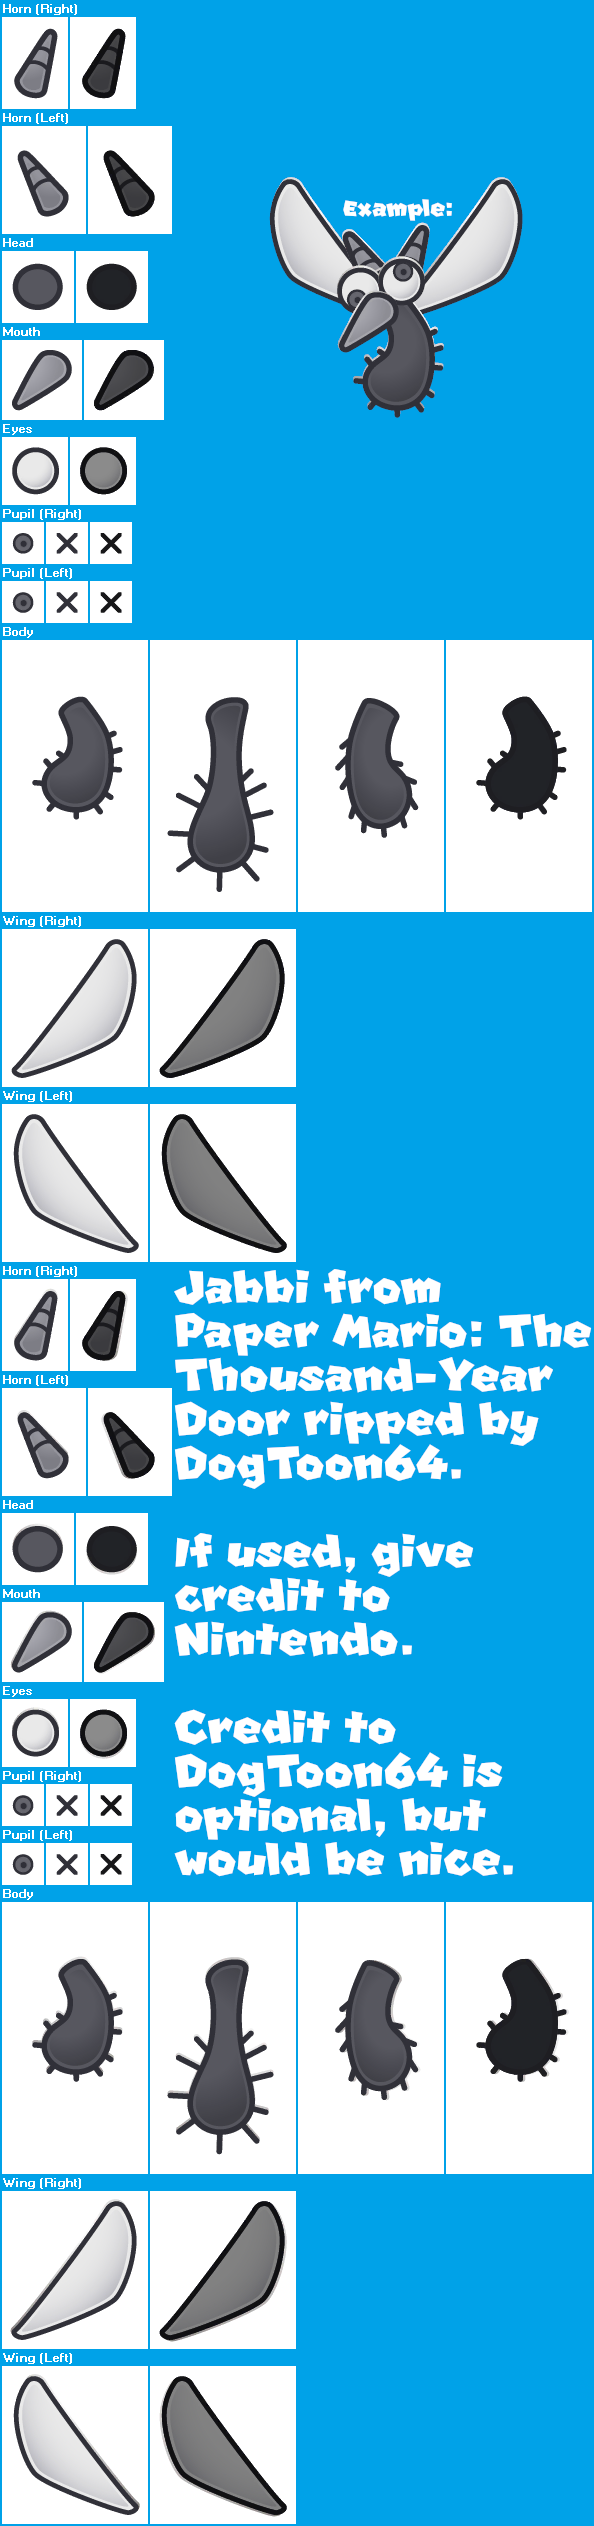 Paper Mario: The Thousand-Year Door - Jabbi